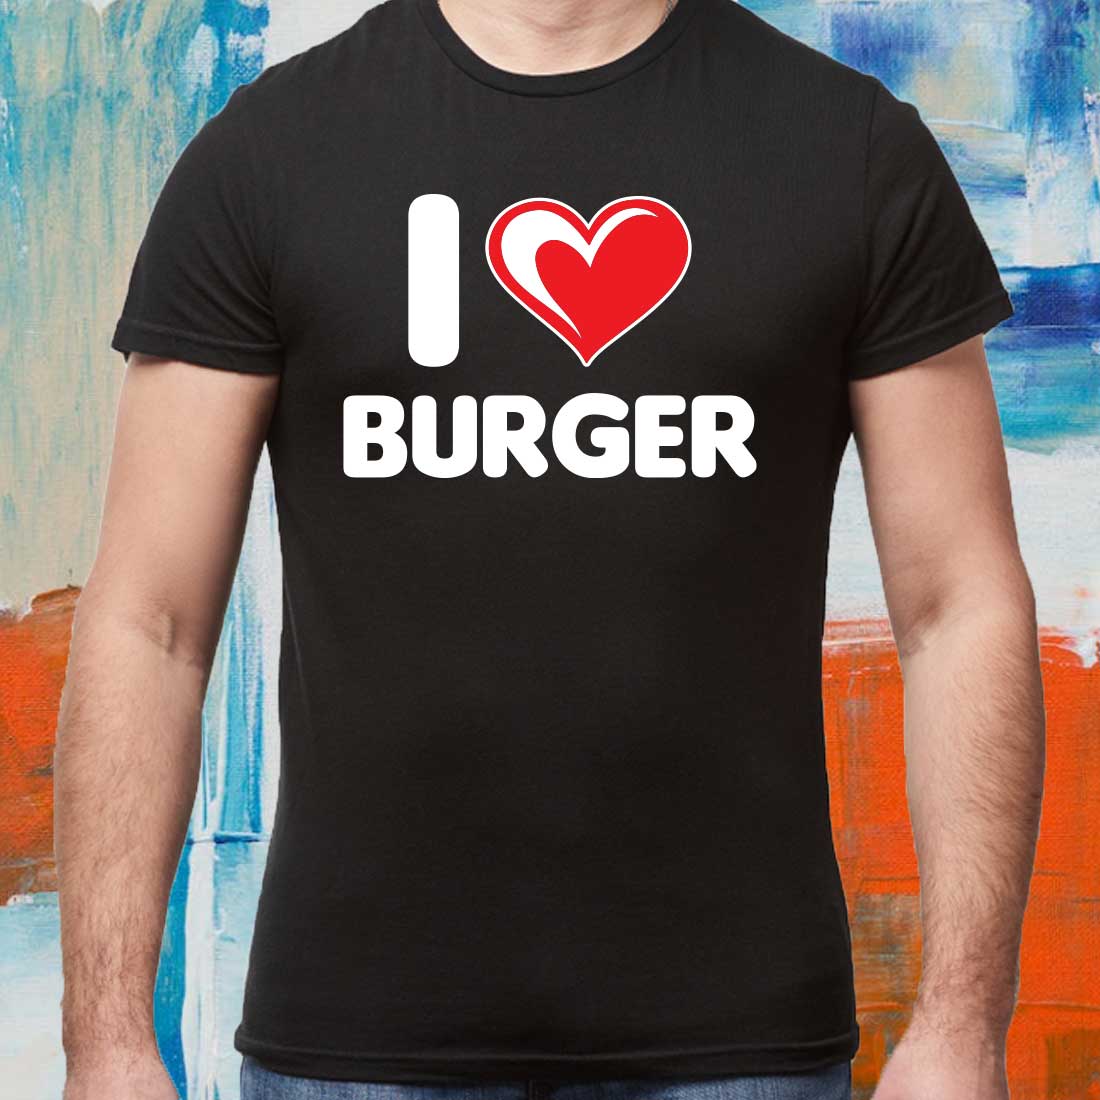 burger t shirt 7 18